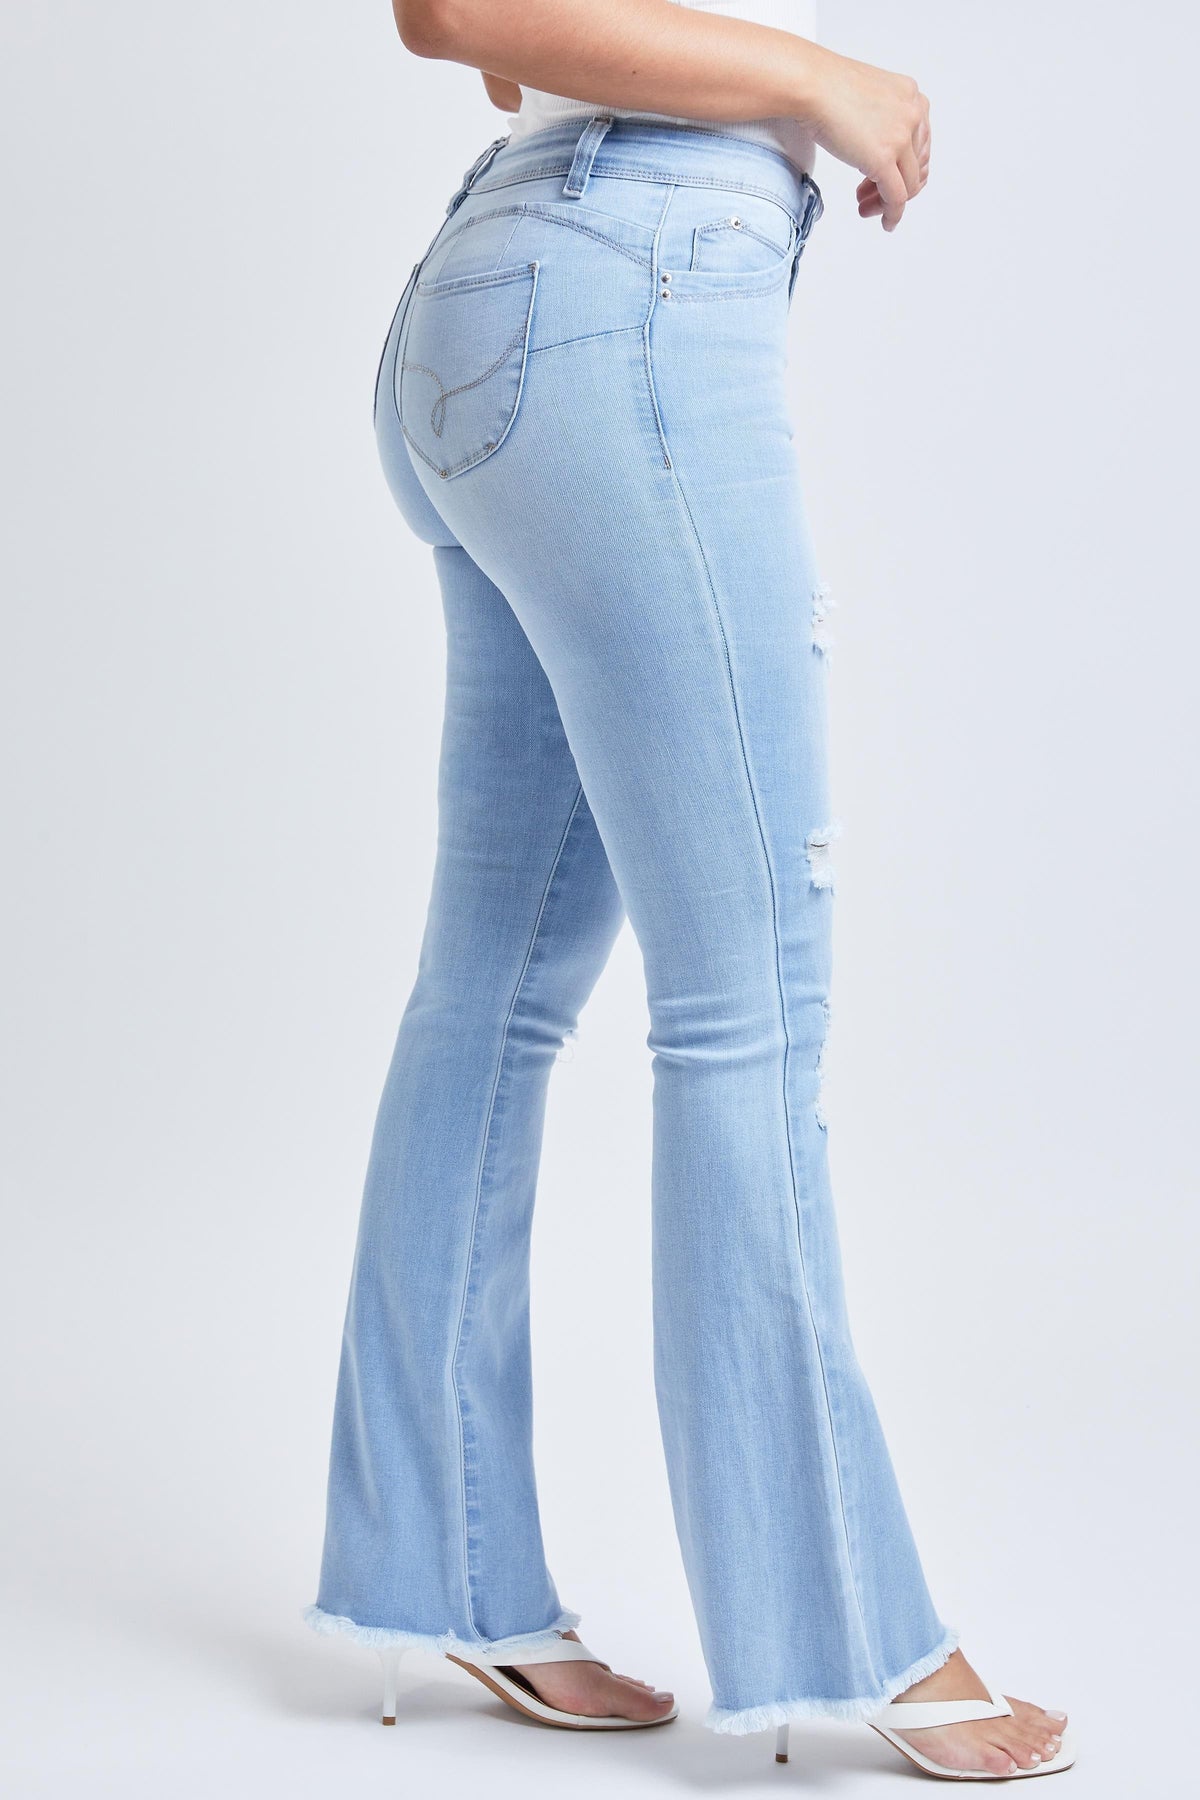 Women's Sustainable WannaBettaButt Super Flare Jeans from YMI